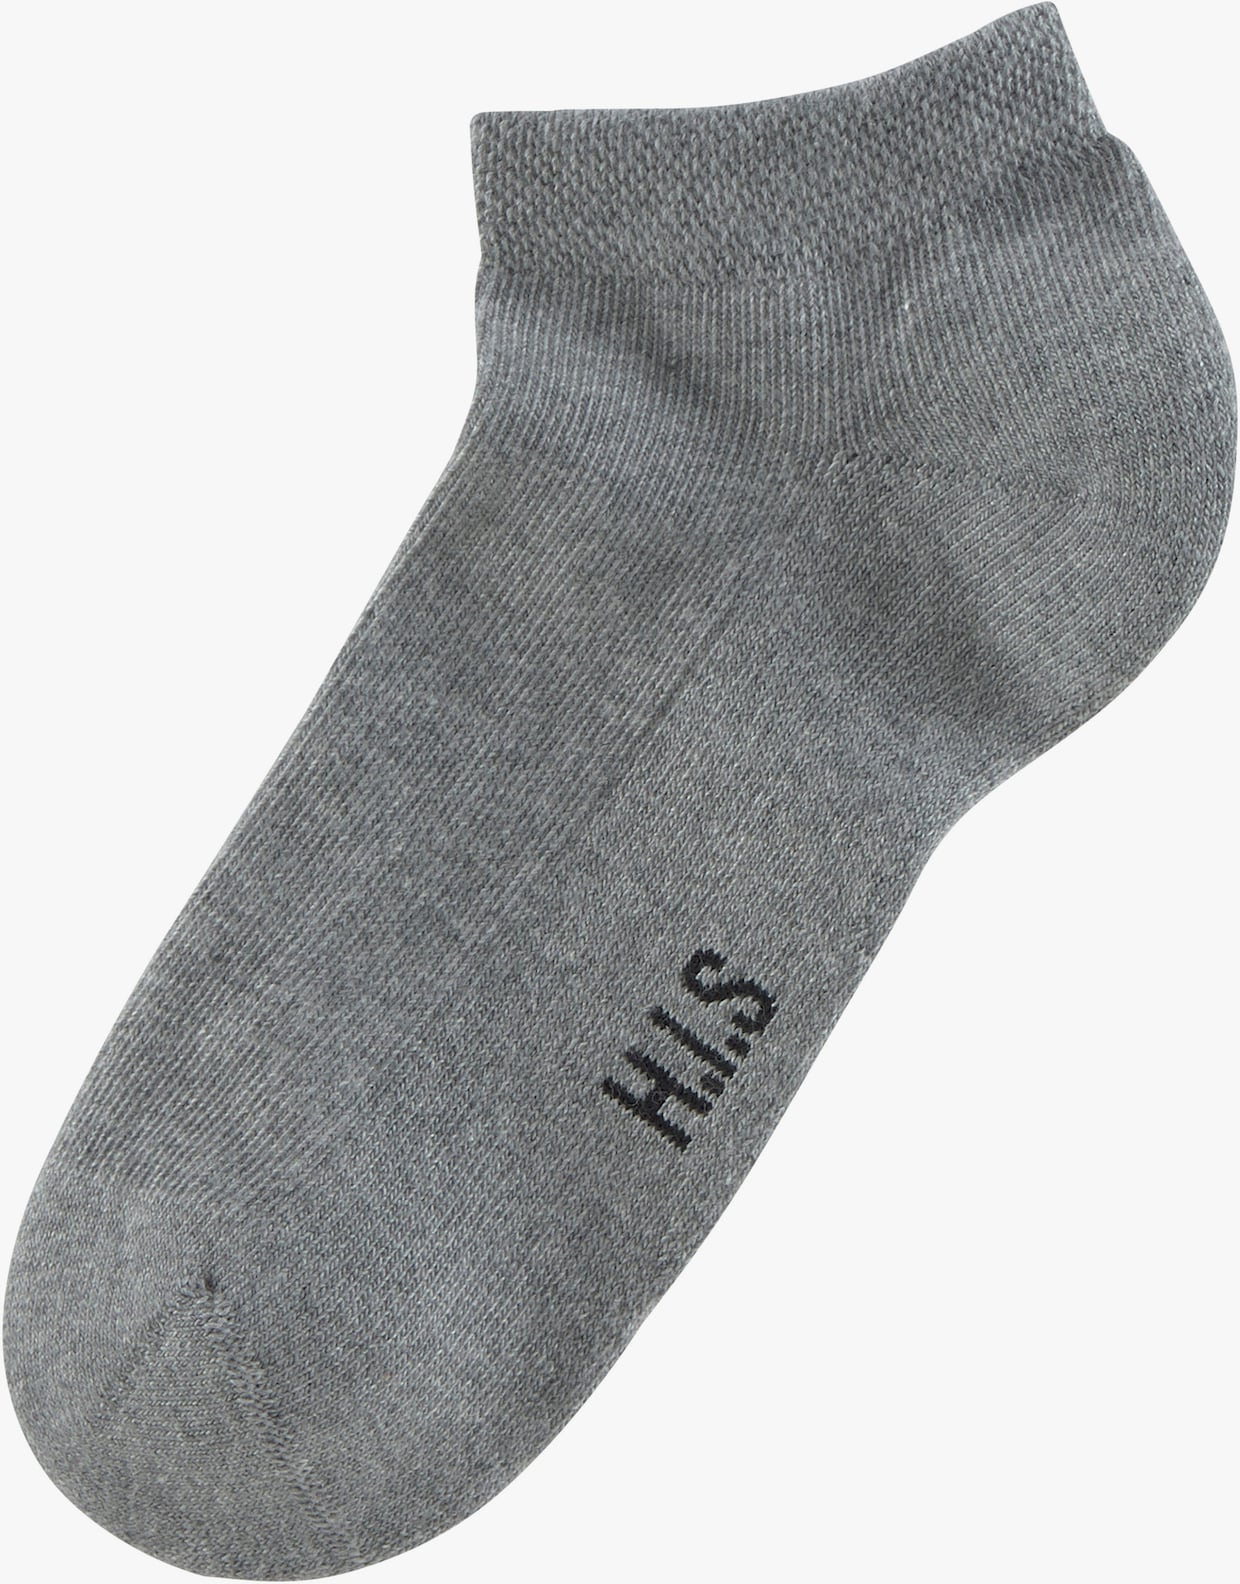 H.I.S Sneakersocken - 2x schwarz, 2x weiß, 2x grau-meliert